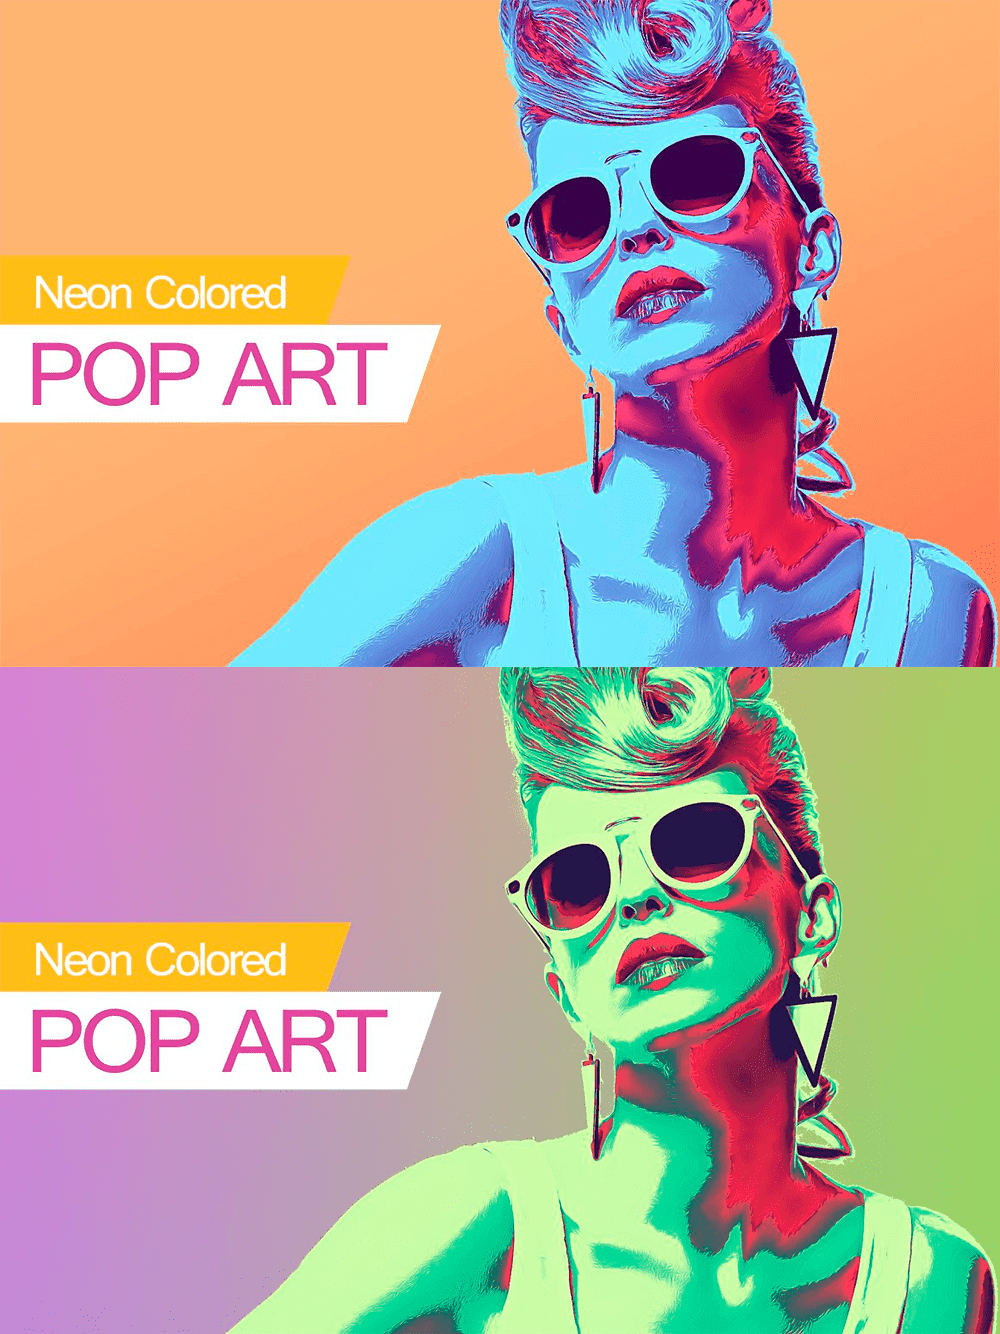 Neon colored pop art, image for pinterest.